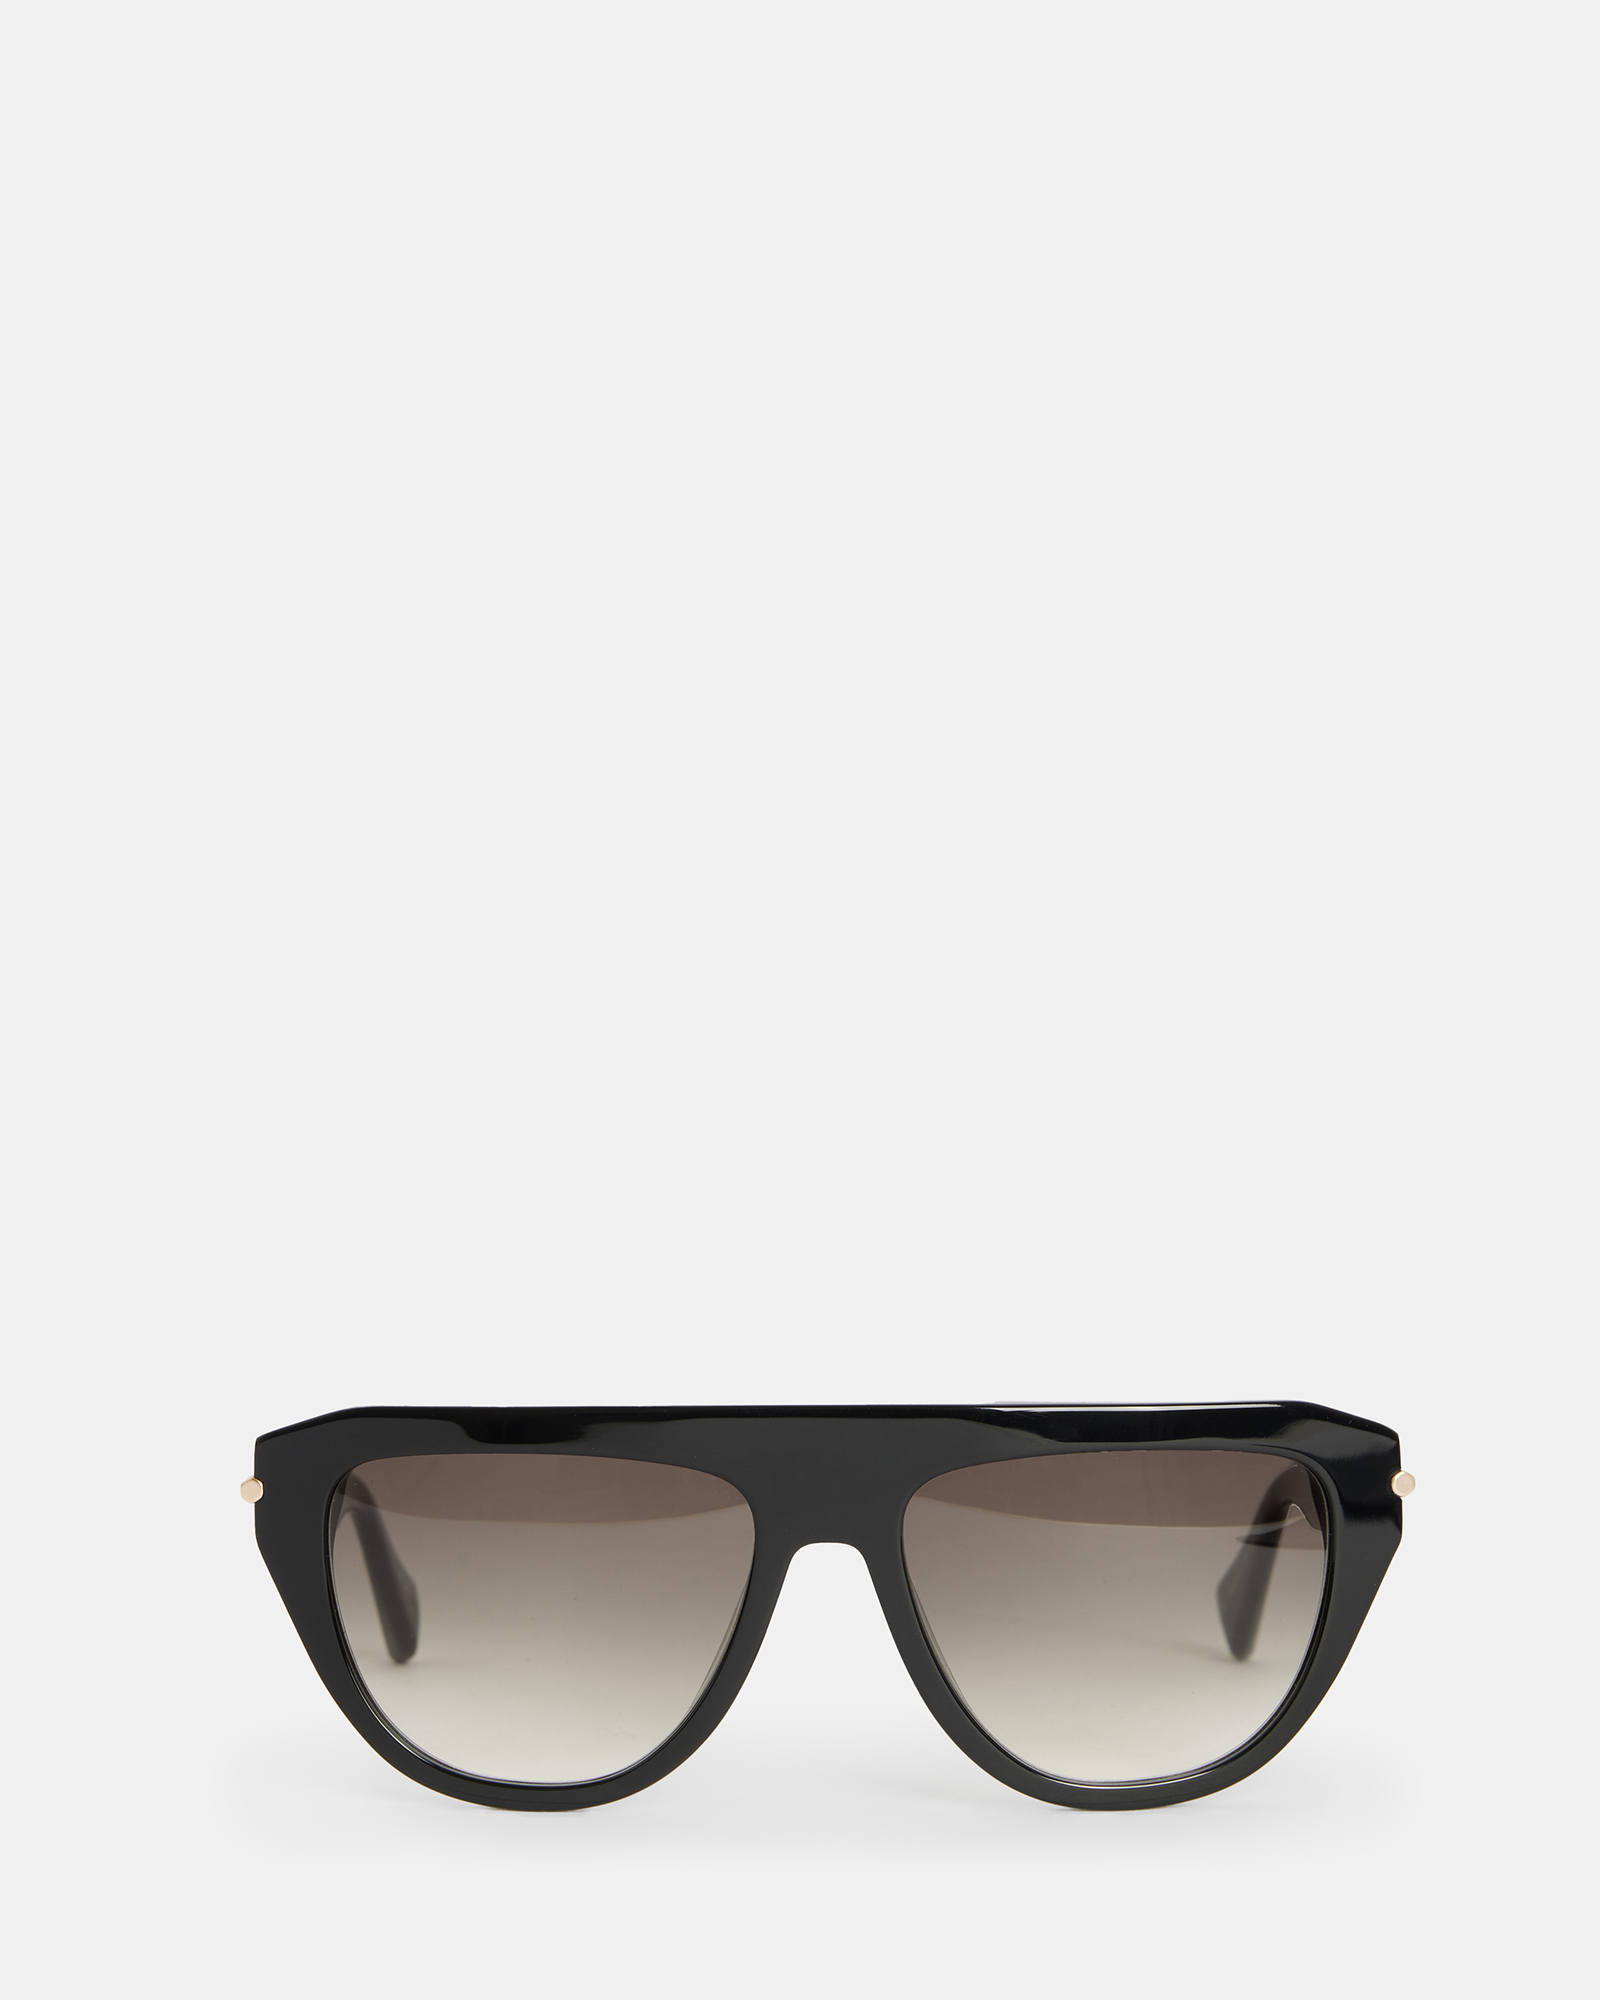 AllSaints Joy Sunglasses,, Black